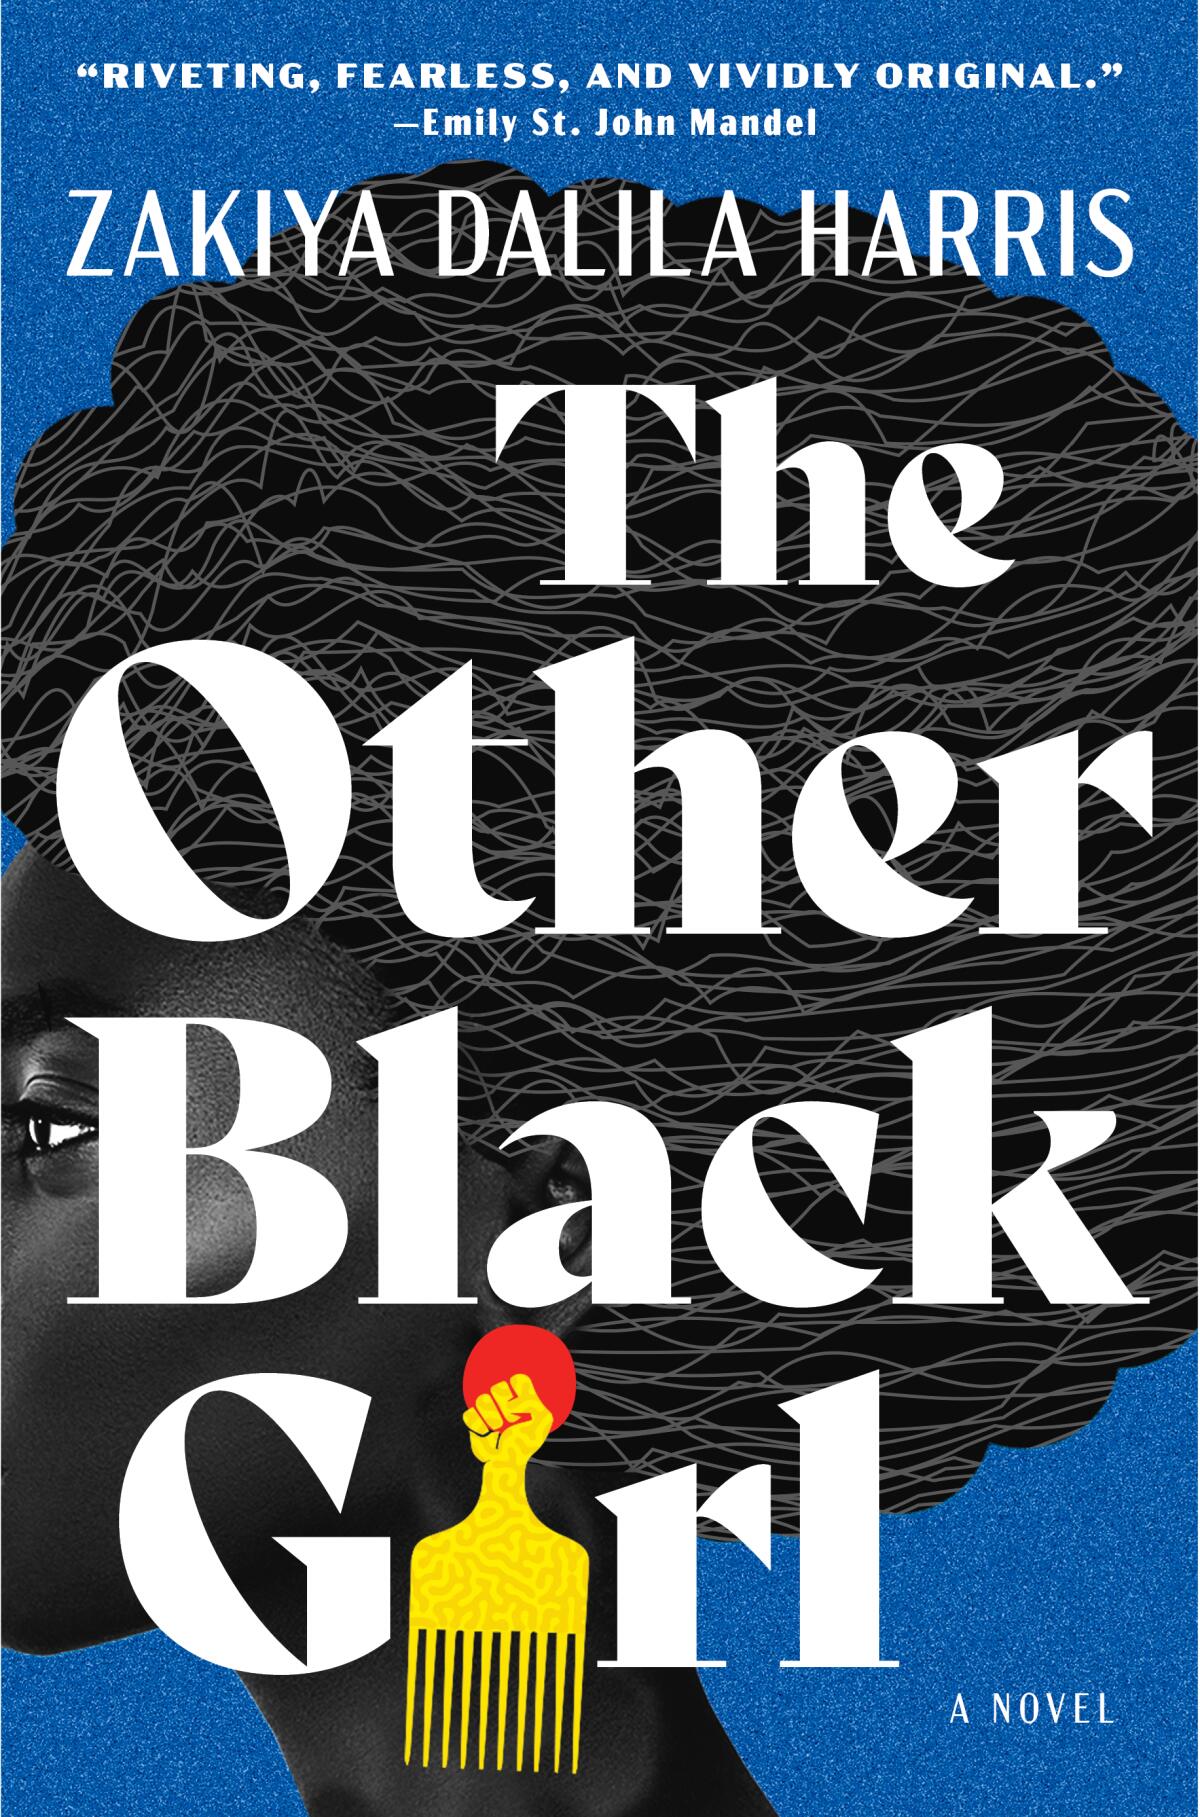 "The Other Black Girl" by Zakiya Dalila Harris